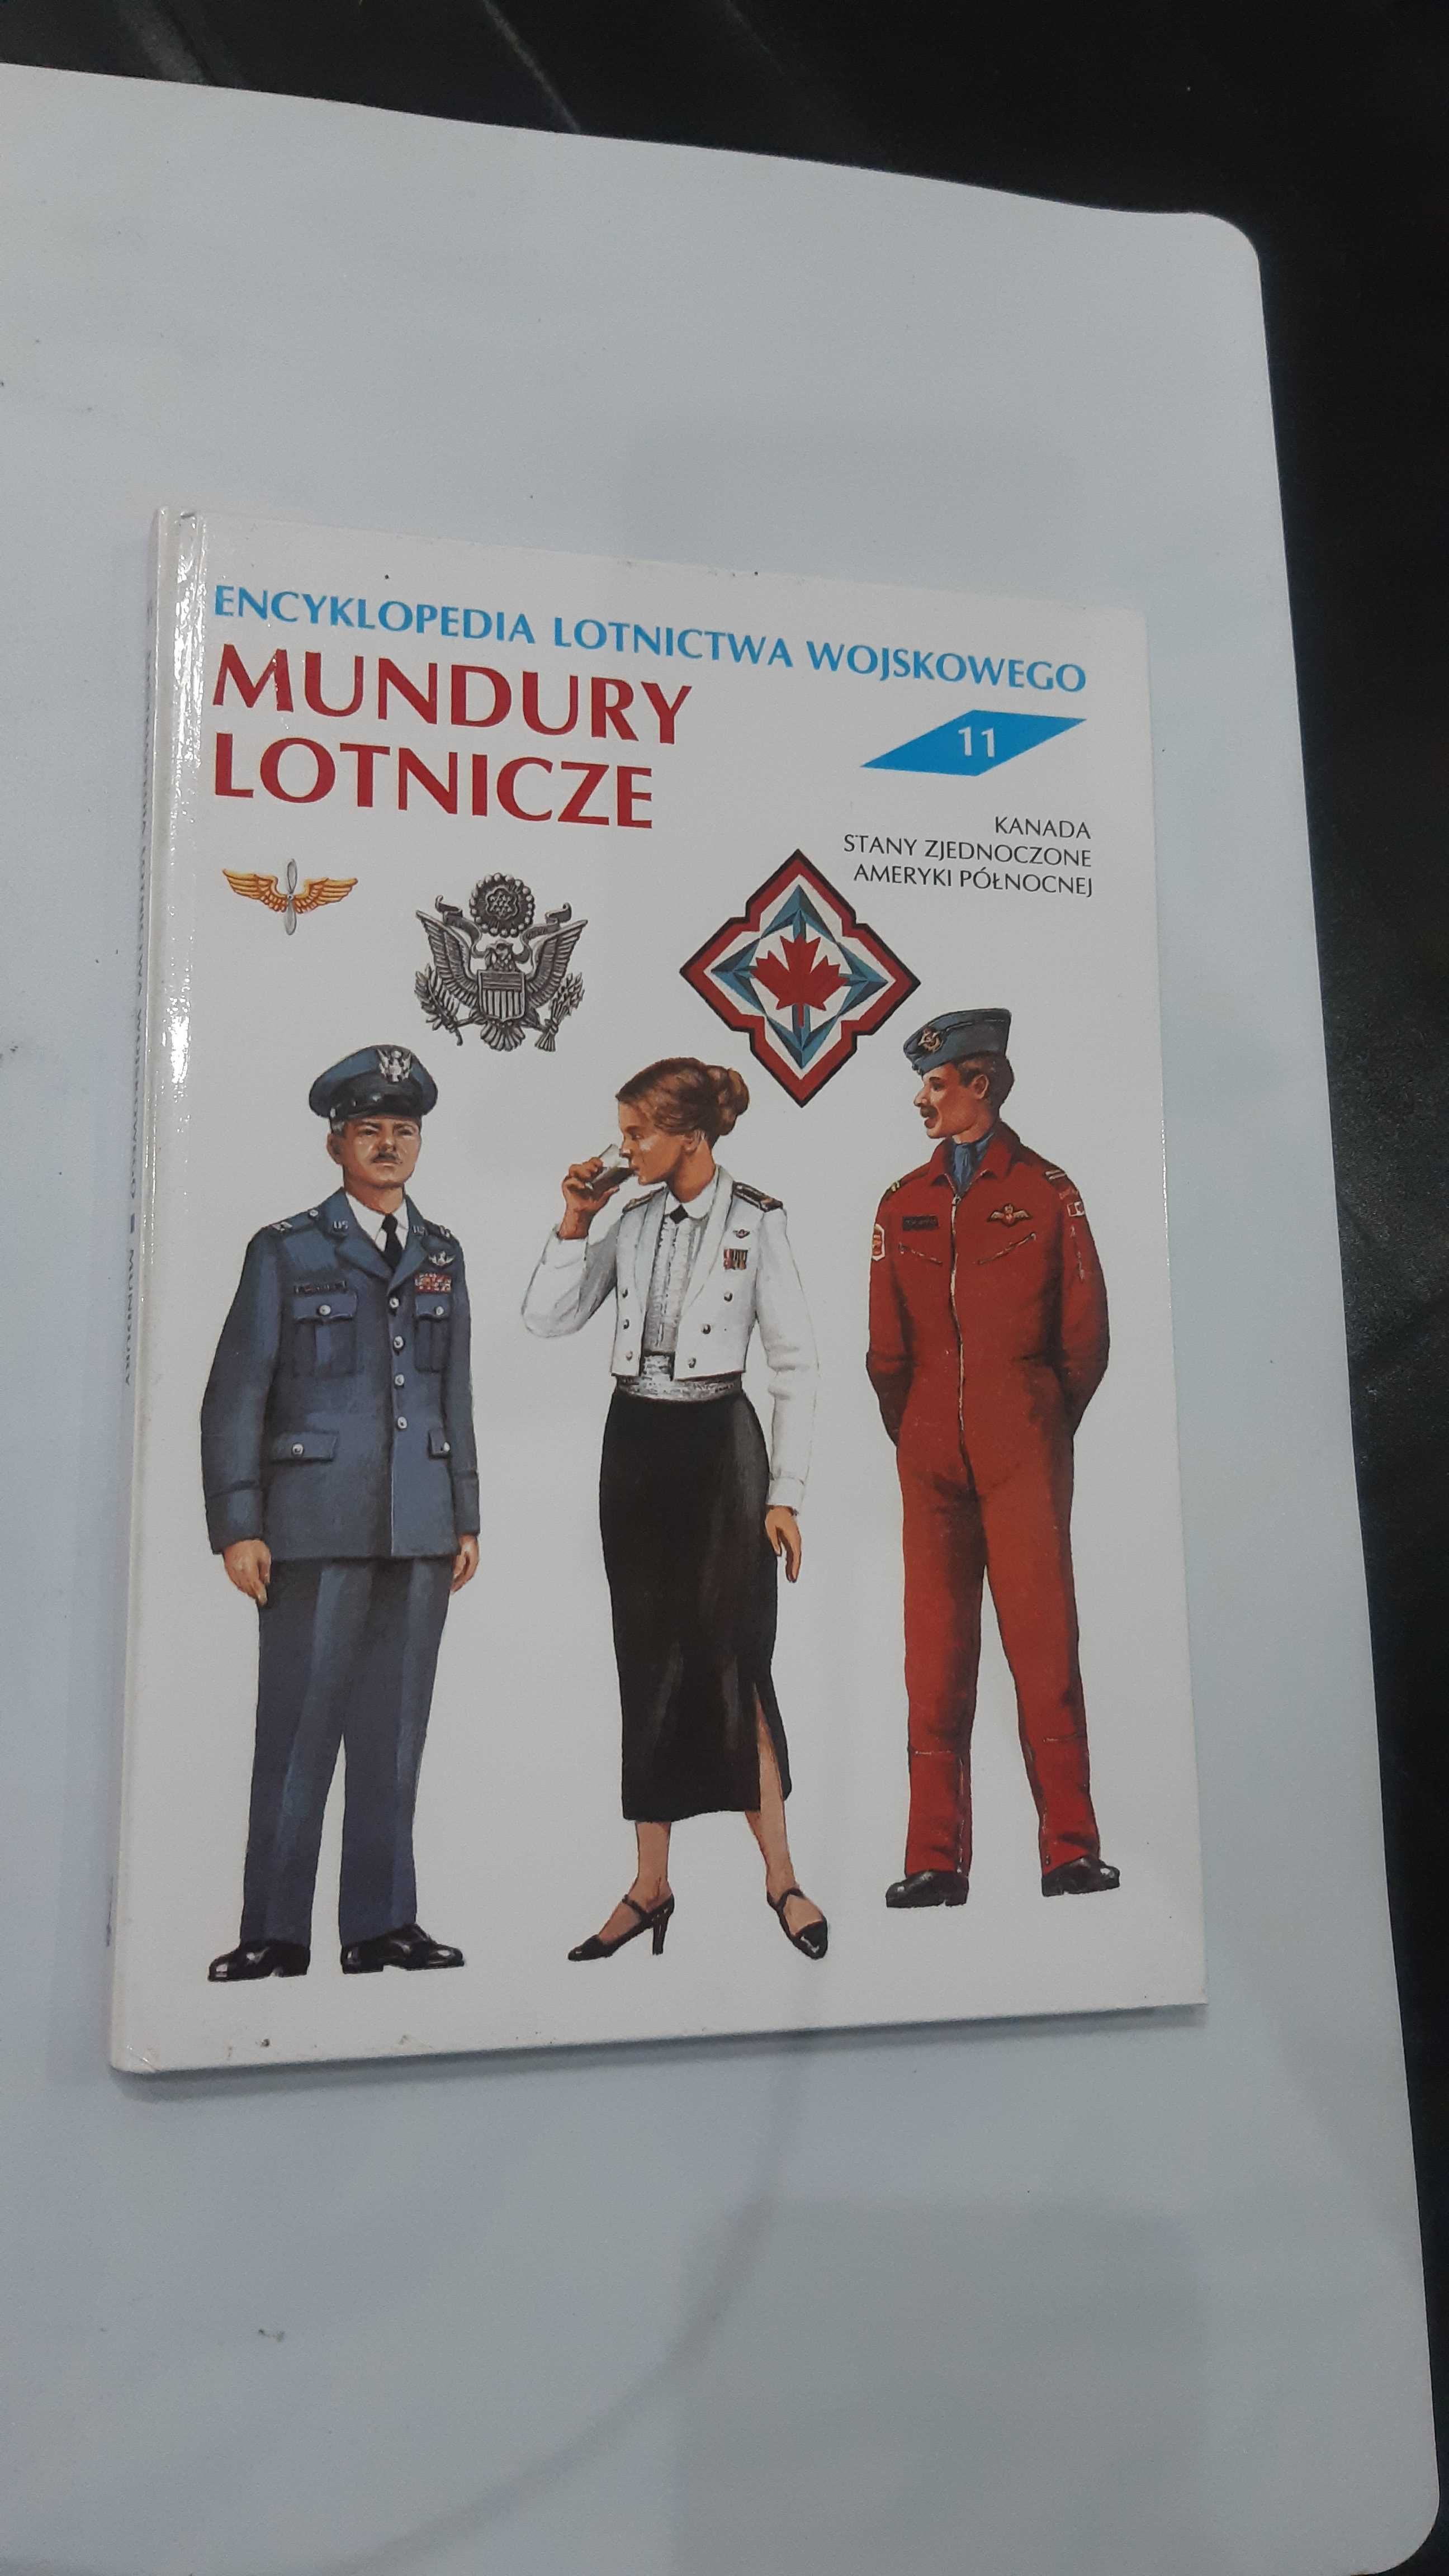 Mundury lotnicze  Encyklopedia lotnictwa wojskowego 11